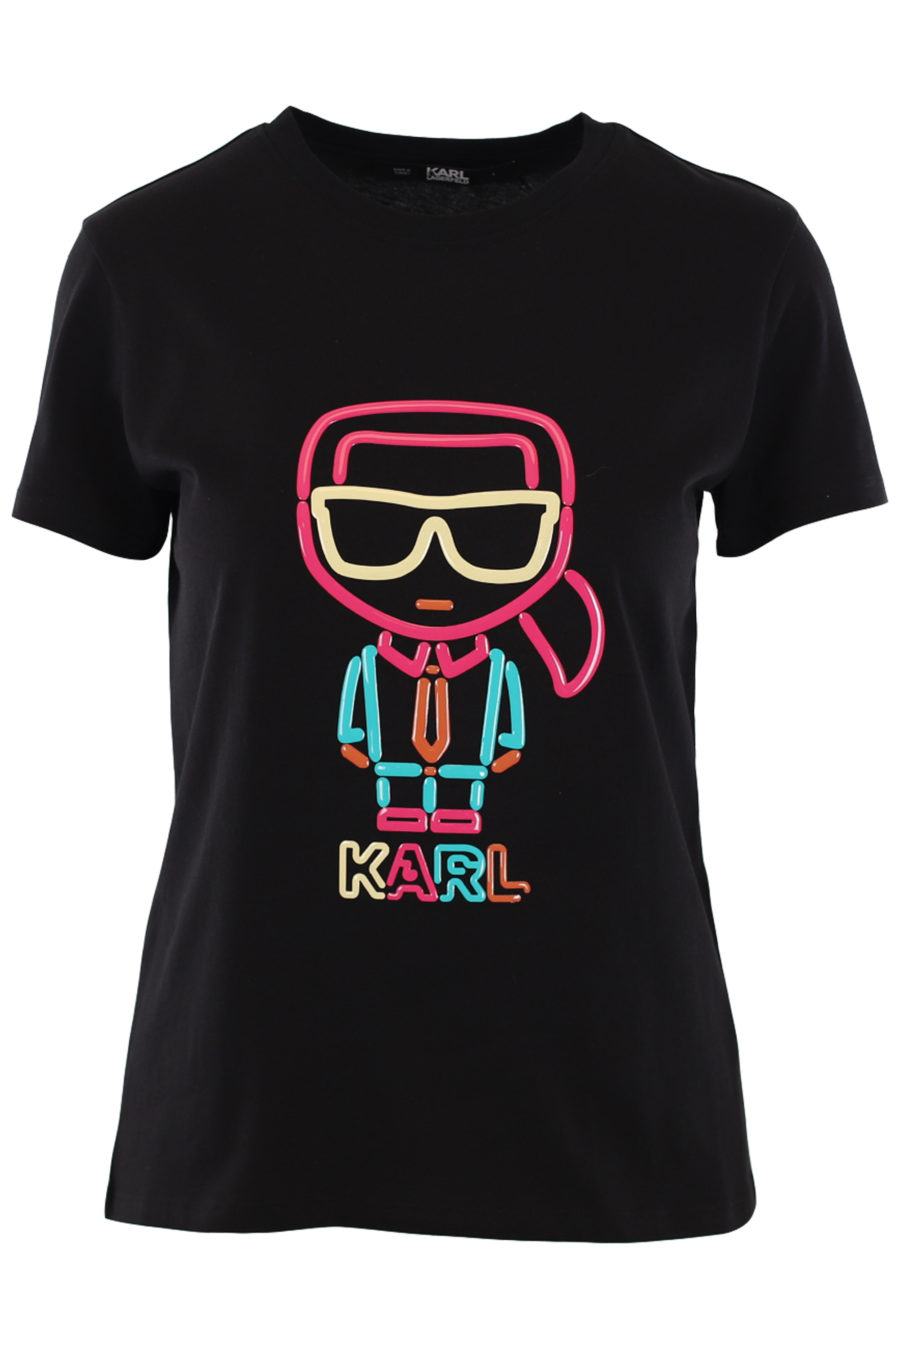 Camiseta negra con logo "karl" multicolor de goma - IMG 0821